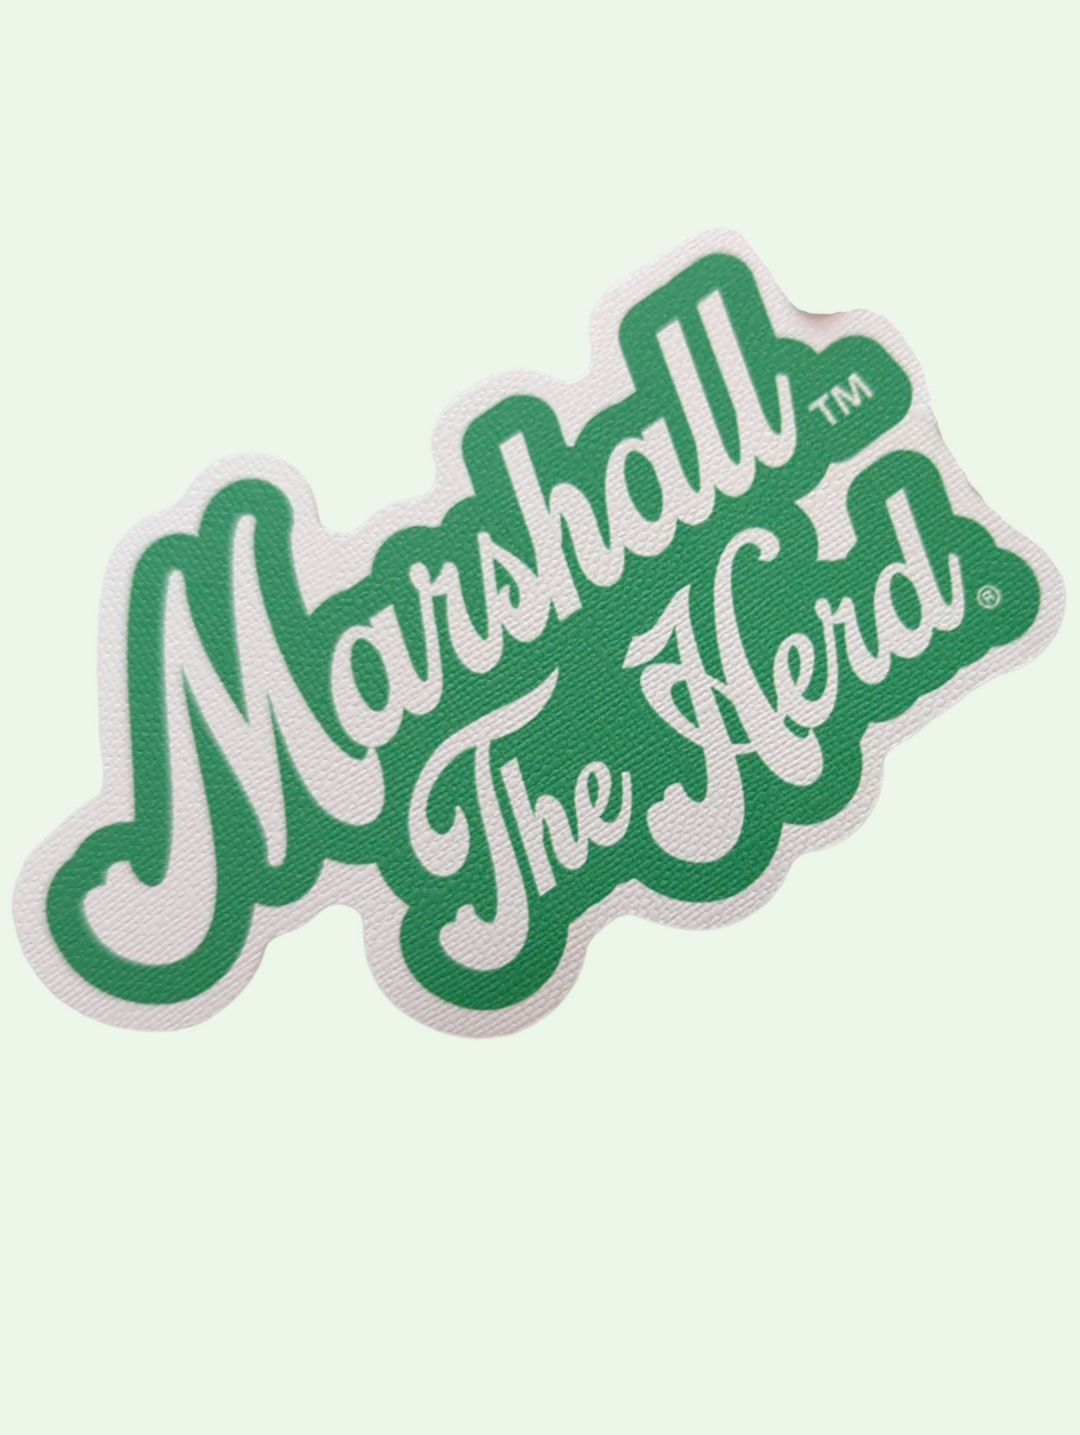 photo of the design of the marshall u script sticker